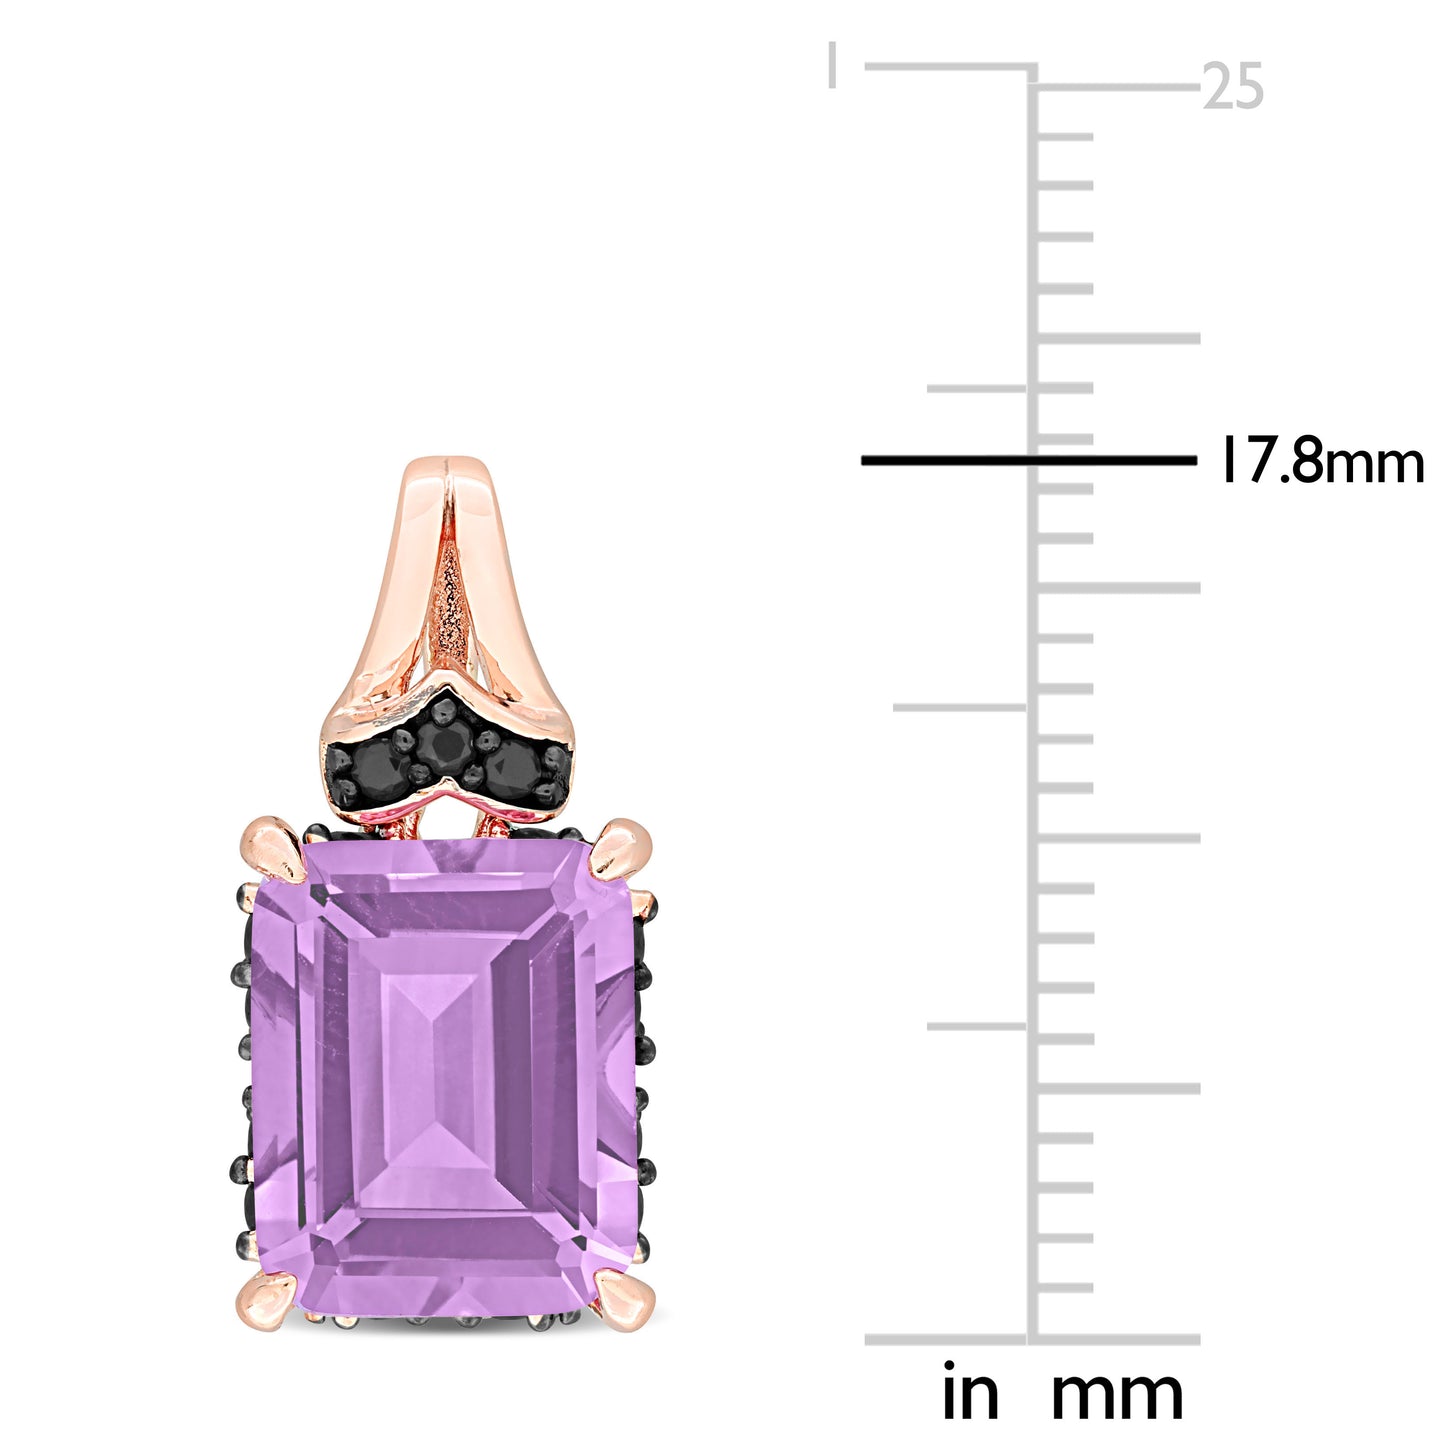 6 3/4 ct TGW Rose de france black sapphire fashion earrings pink silver